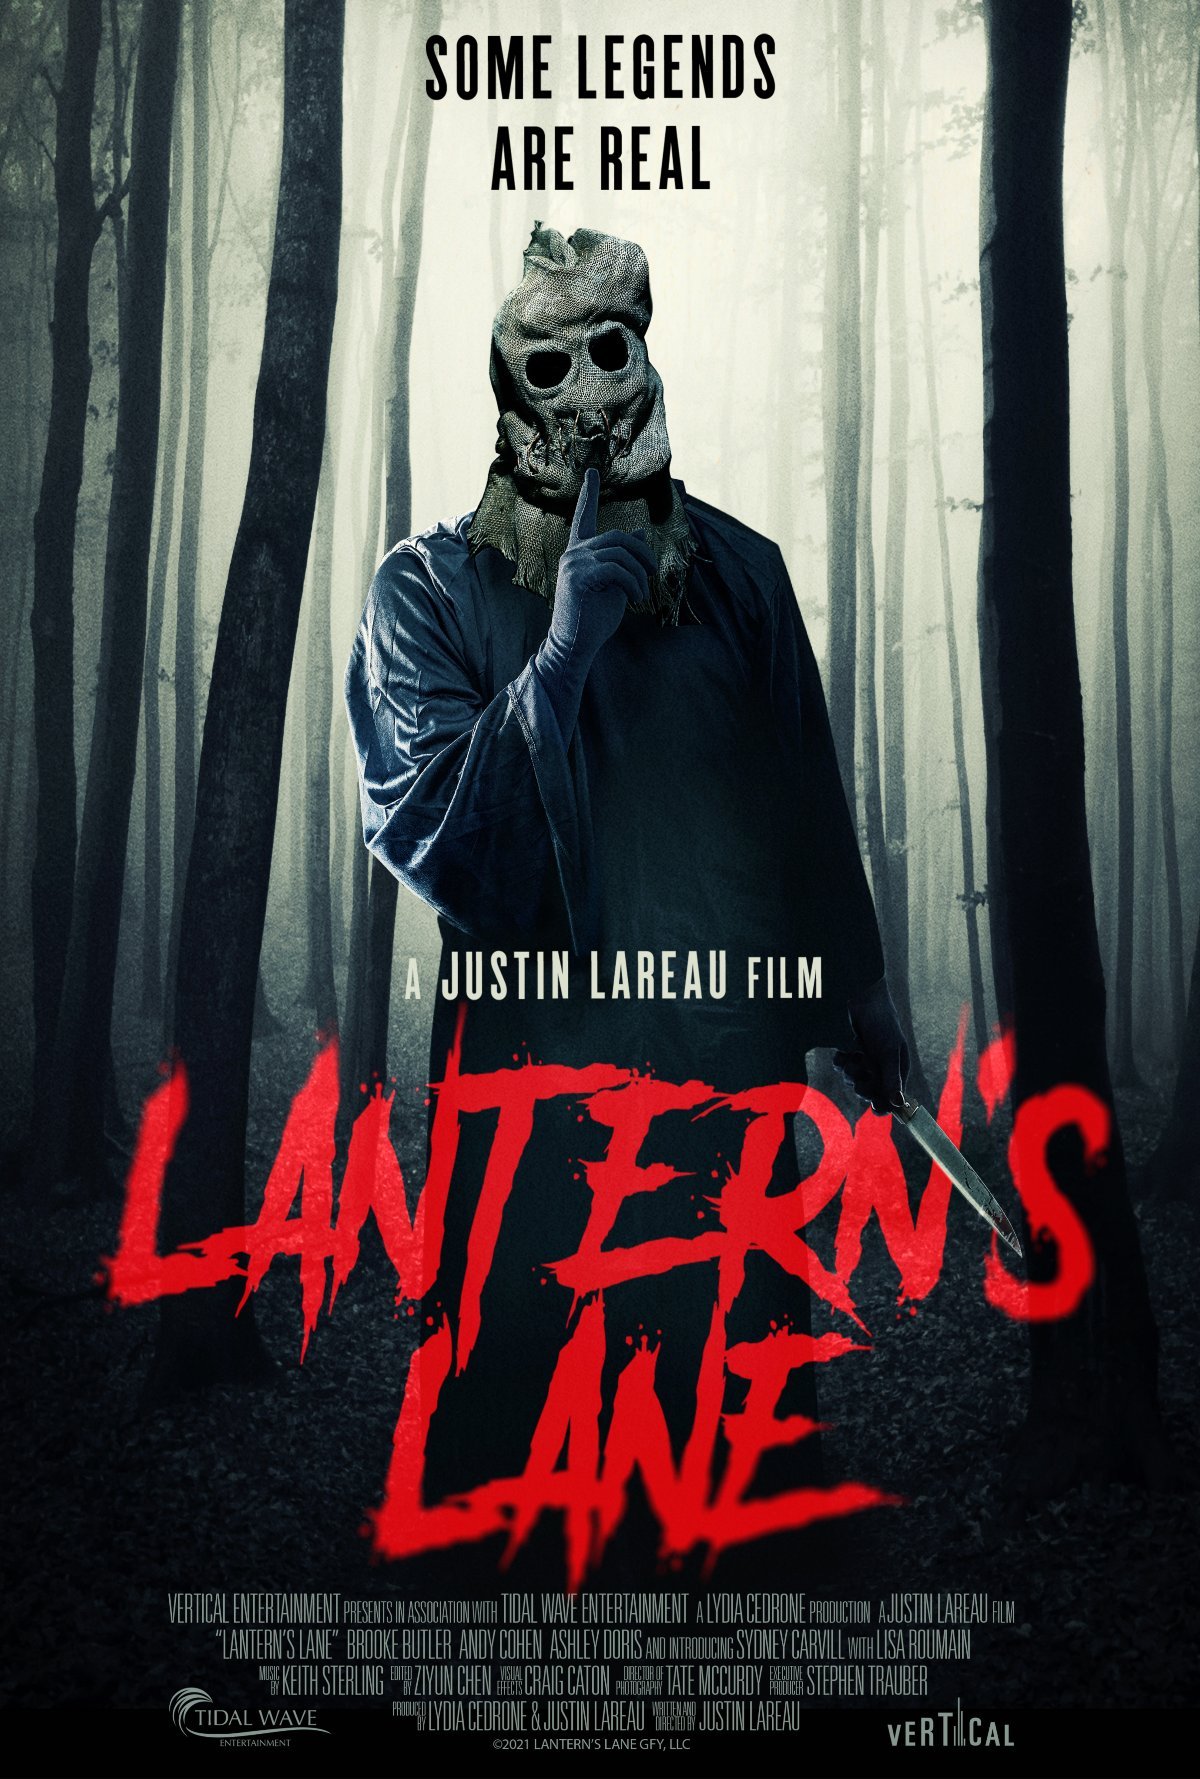 Lanterns-Lane-poster - Daily Dead